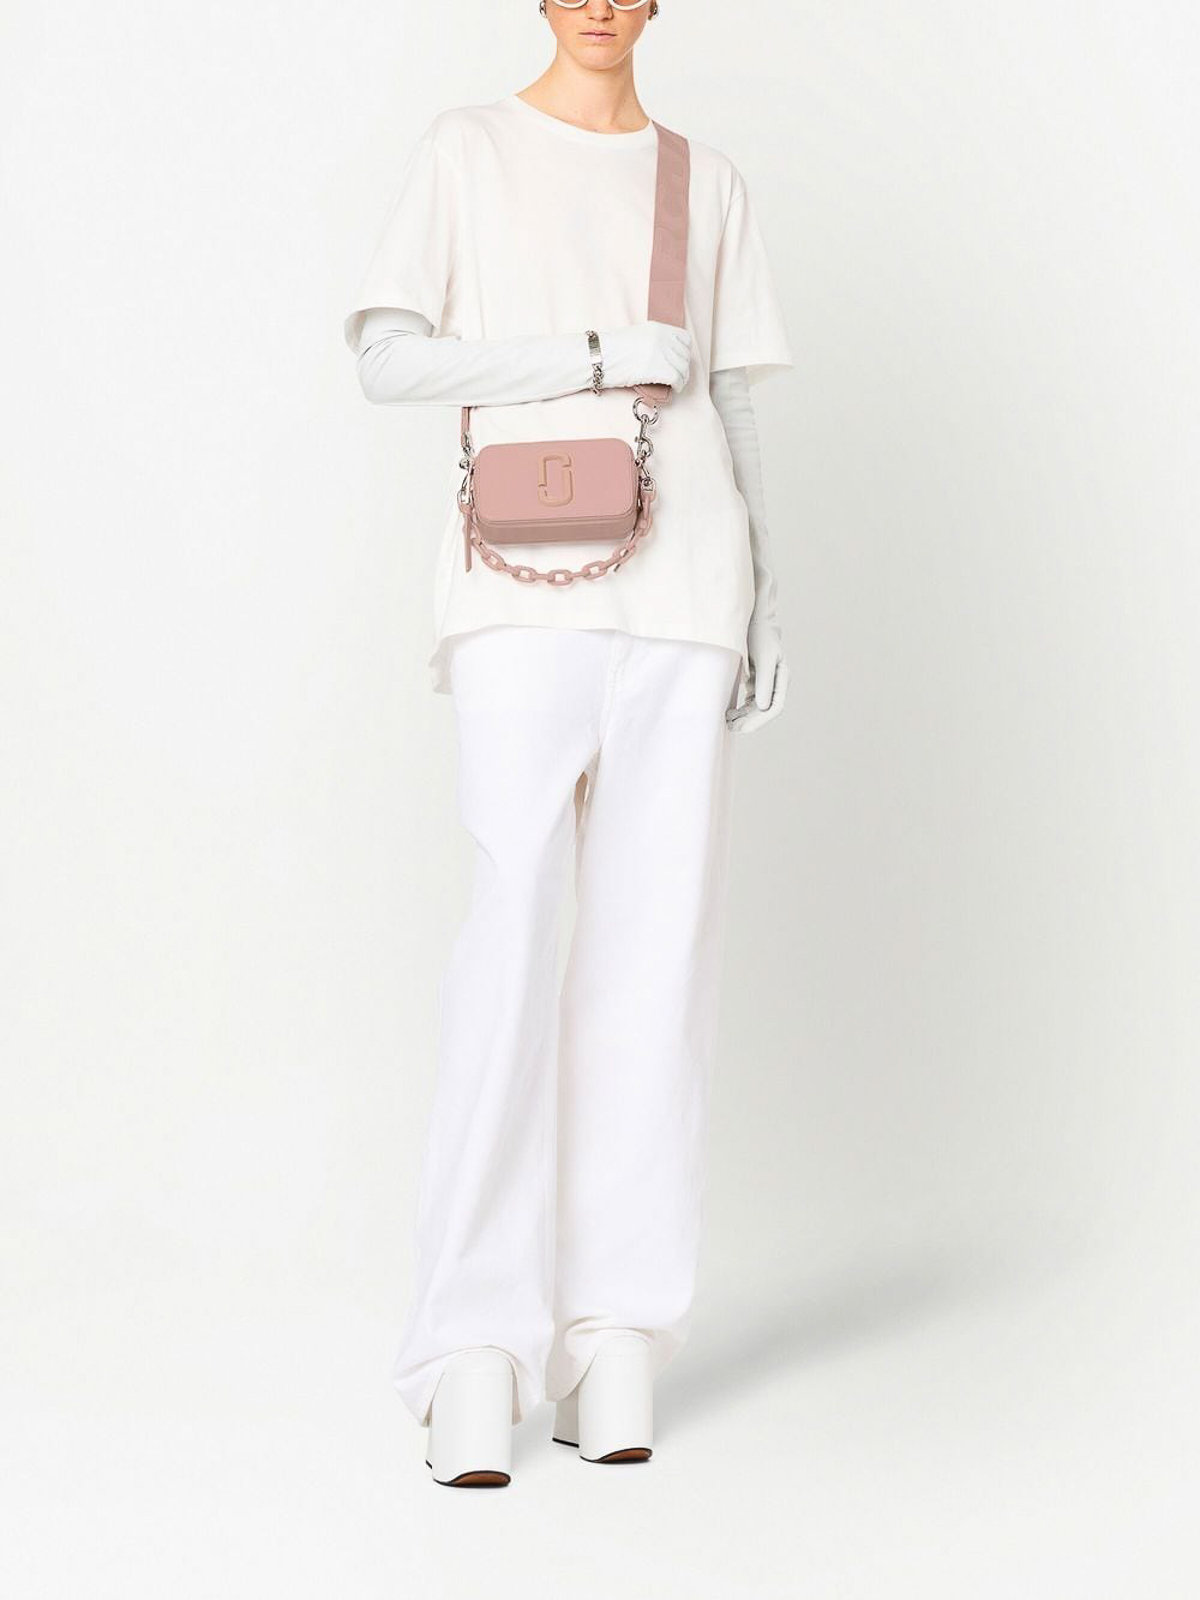 Shop Marc Jacobs Bolsa Bandolera - The Snapshot In Pink